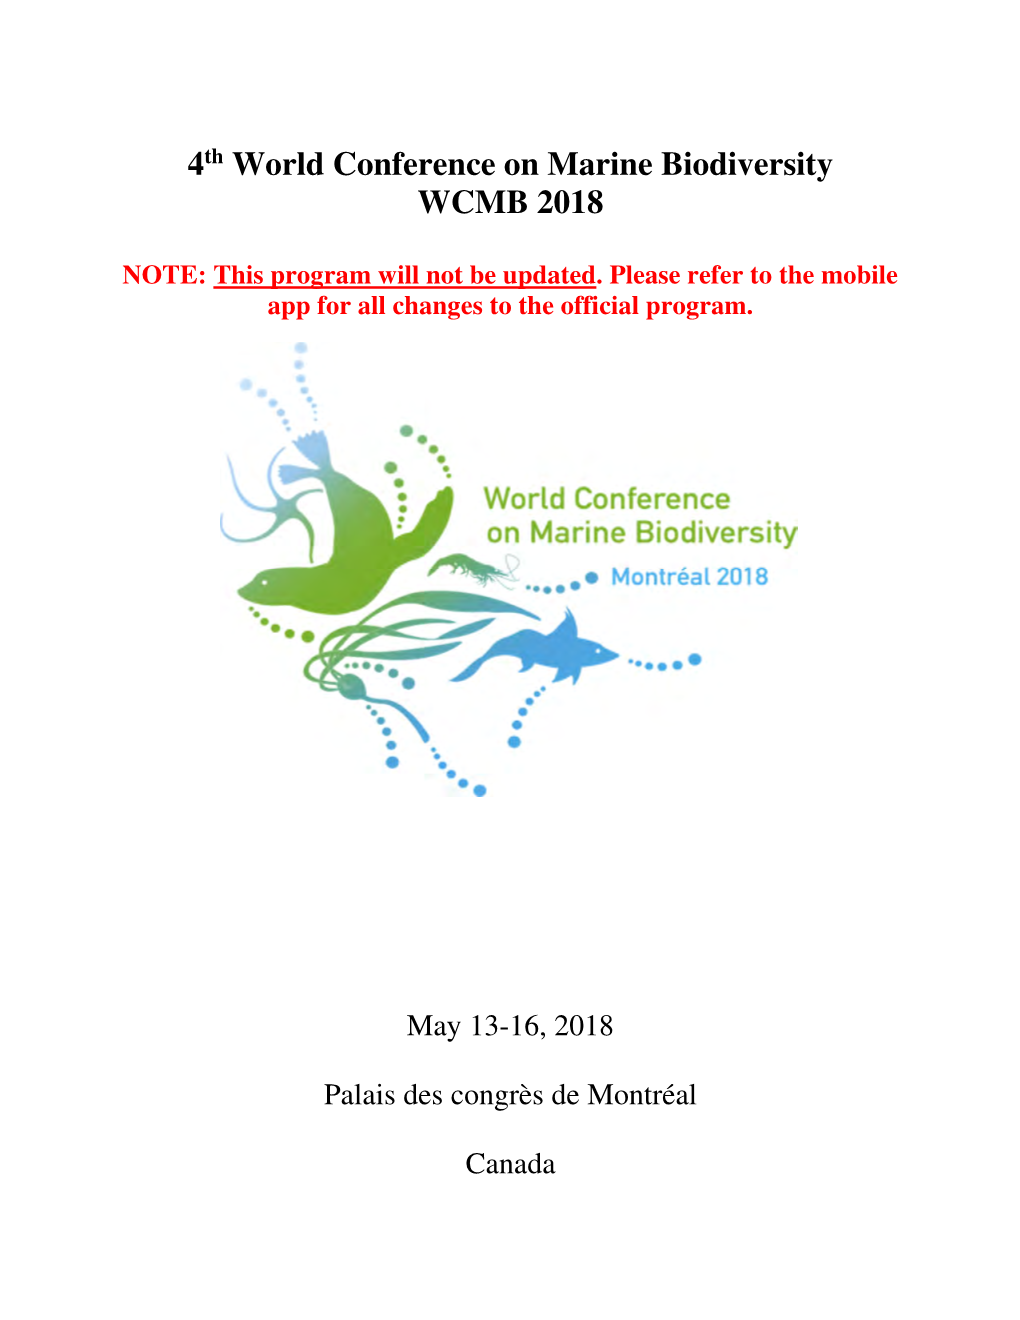 4Th World Conference on Marine Biodiversity WCMB 2018